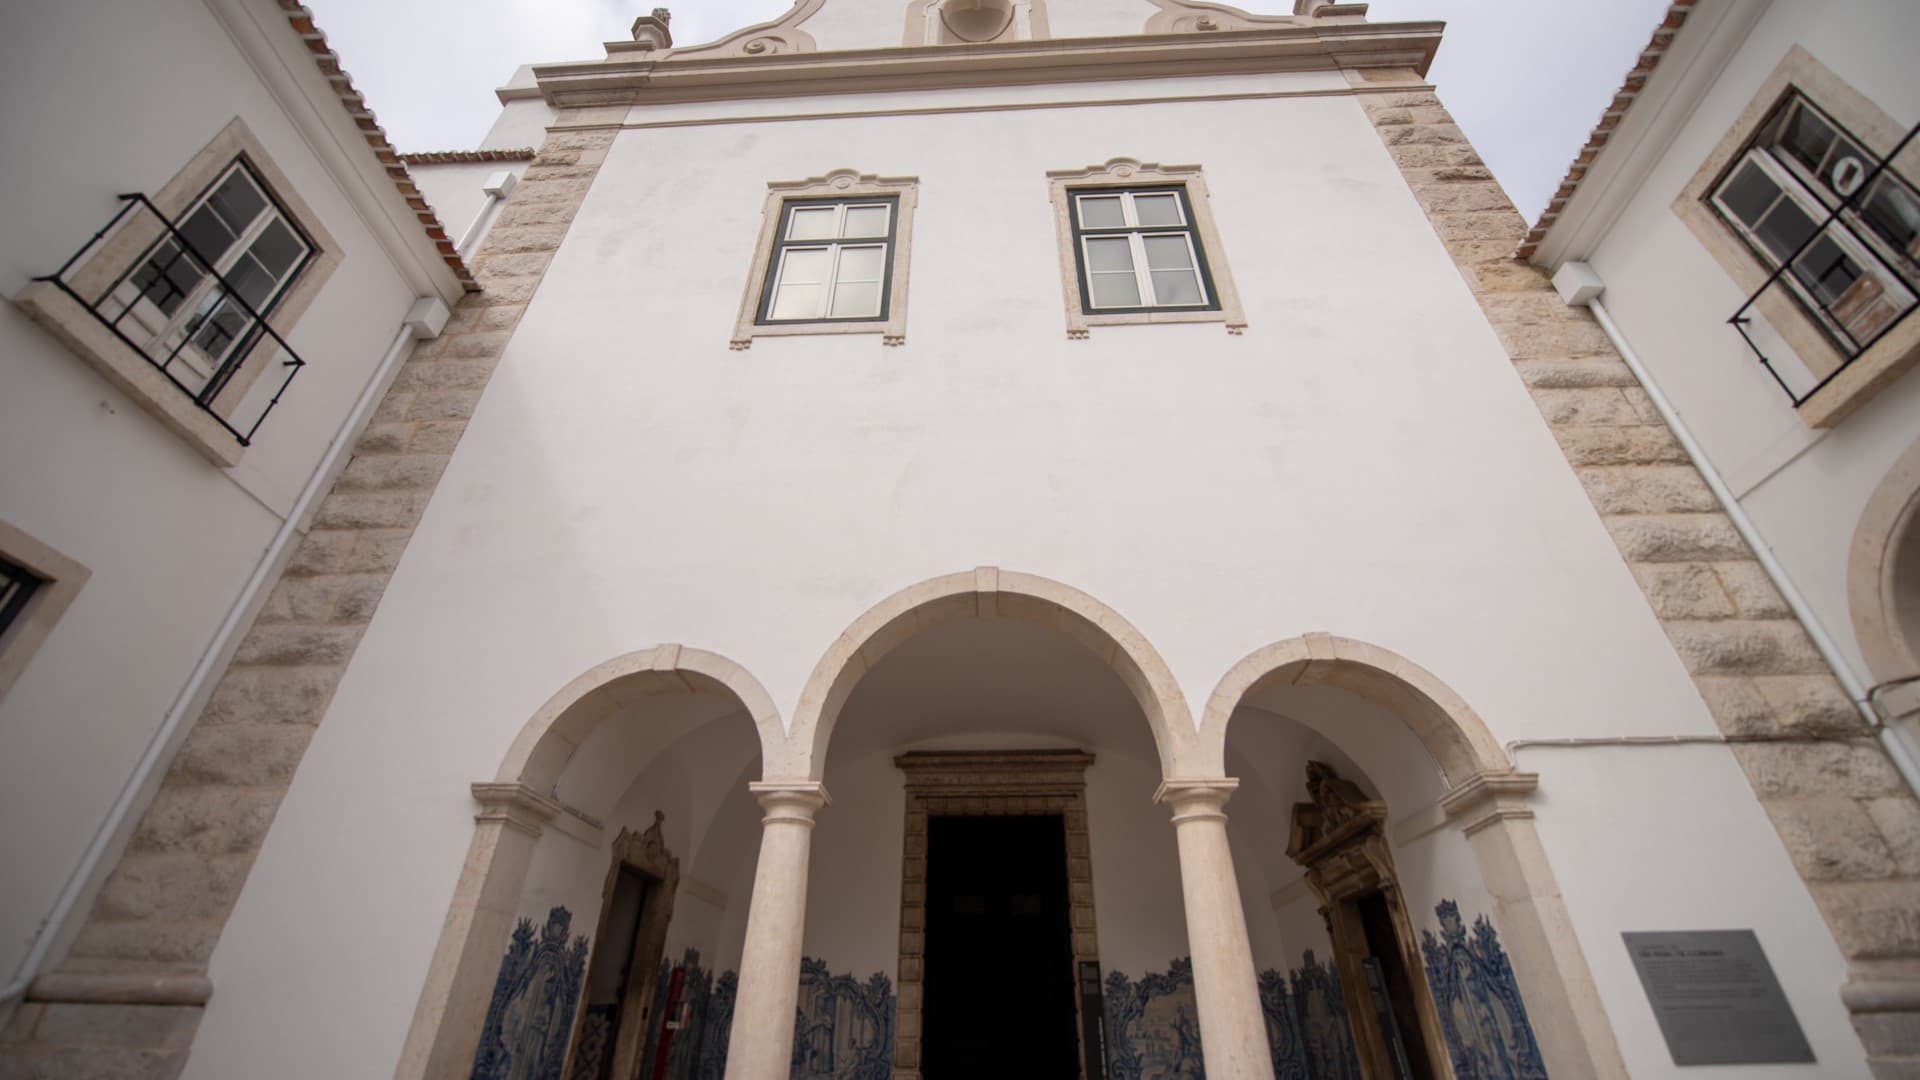 Open Conventos regressa a Lisboa com 36 conventos de portas abertas